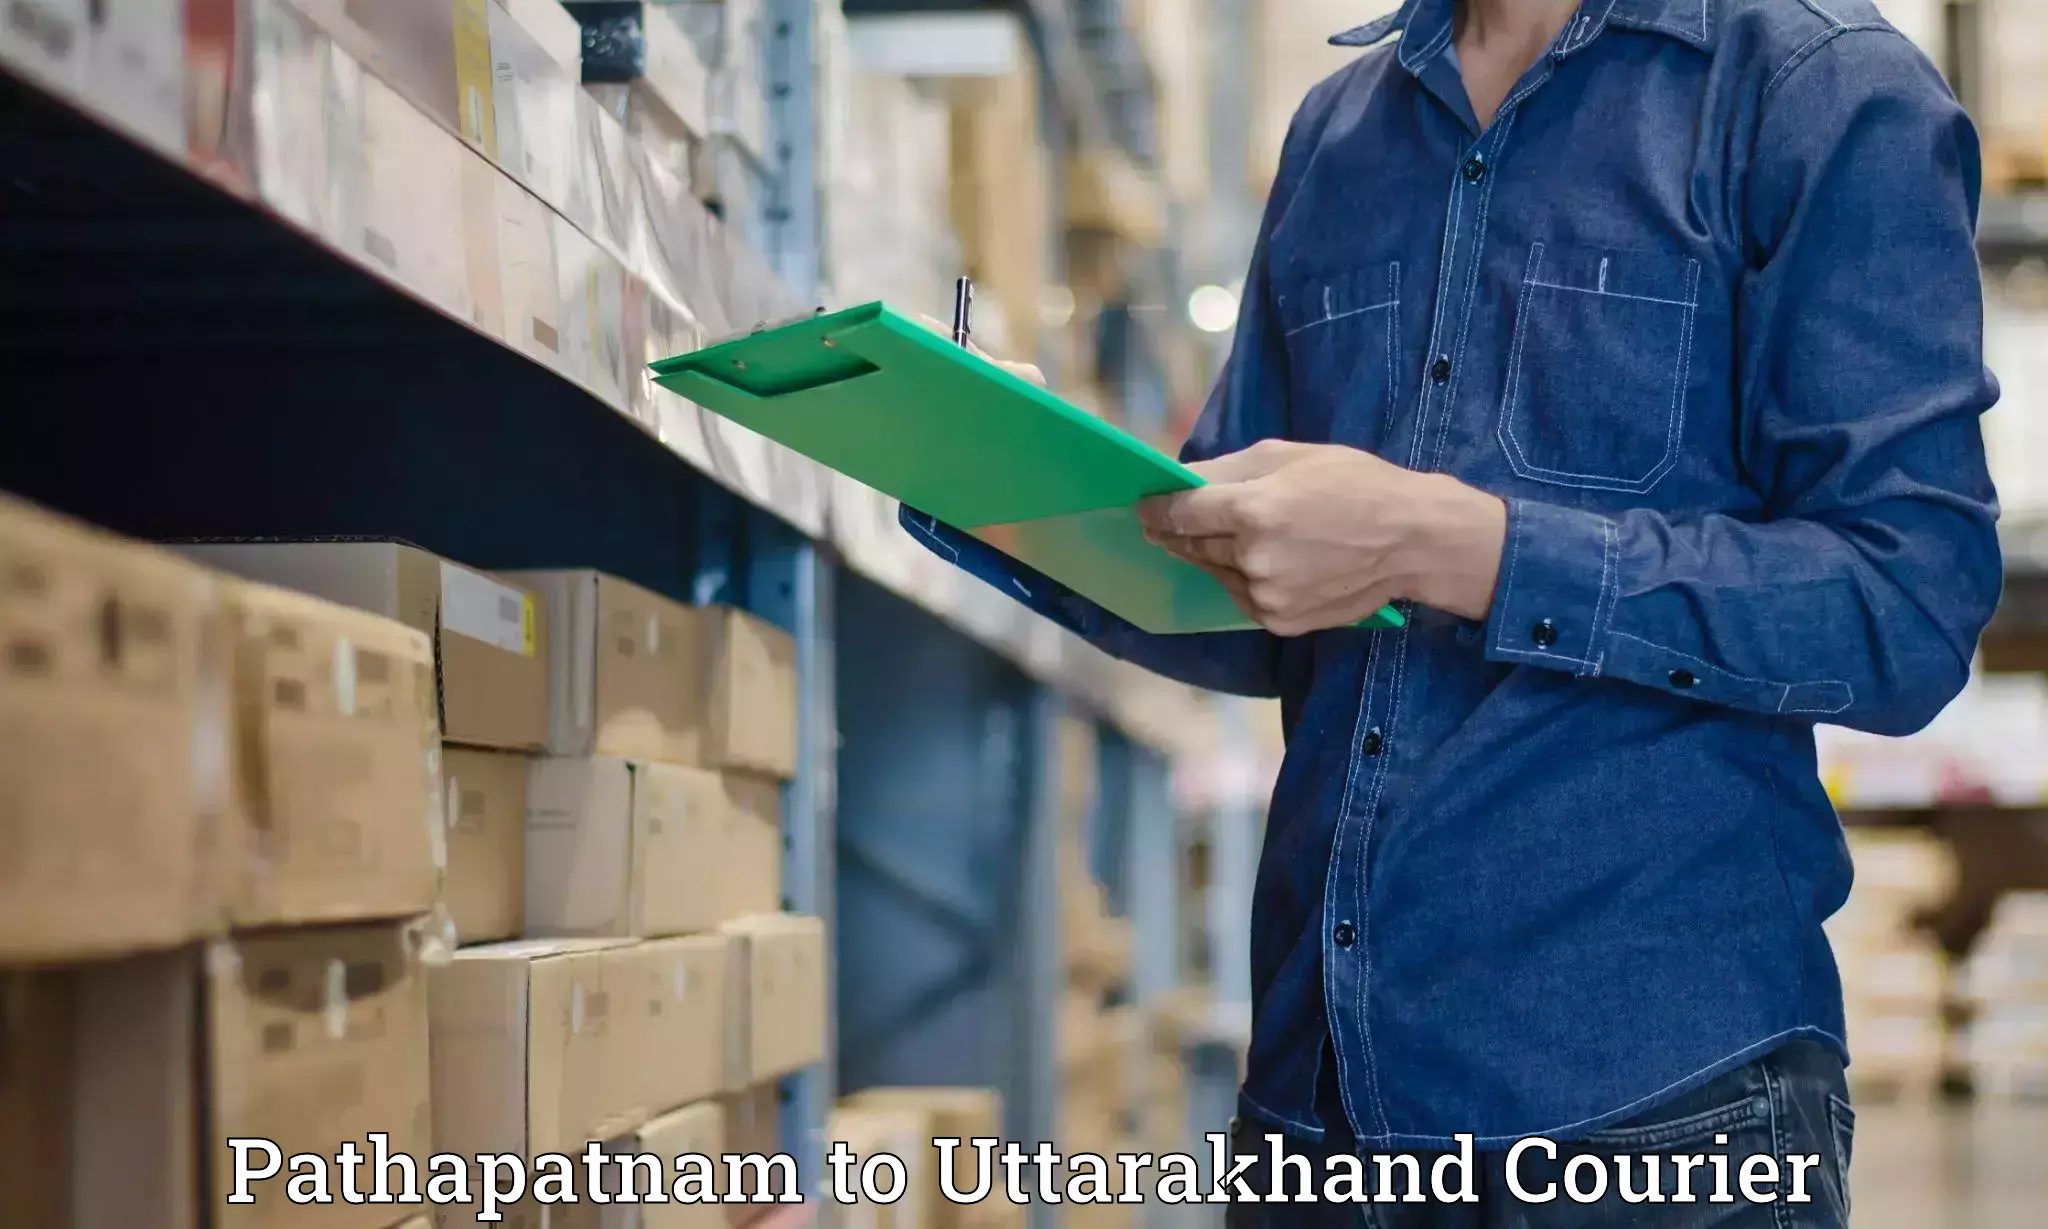 Efficient logistics management Pathapatnam to Rudrapur